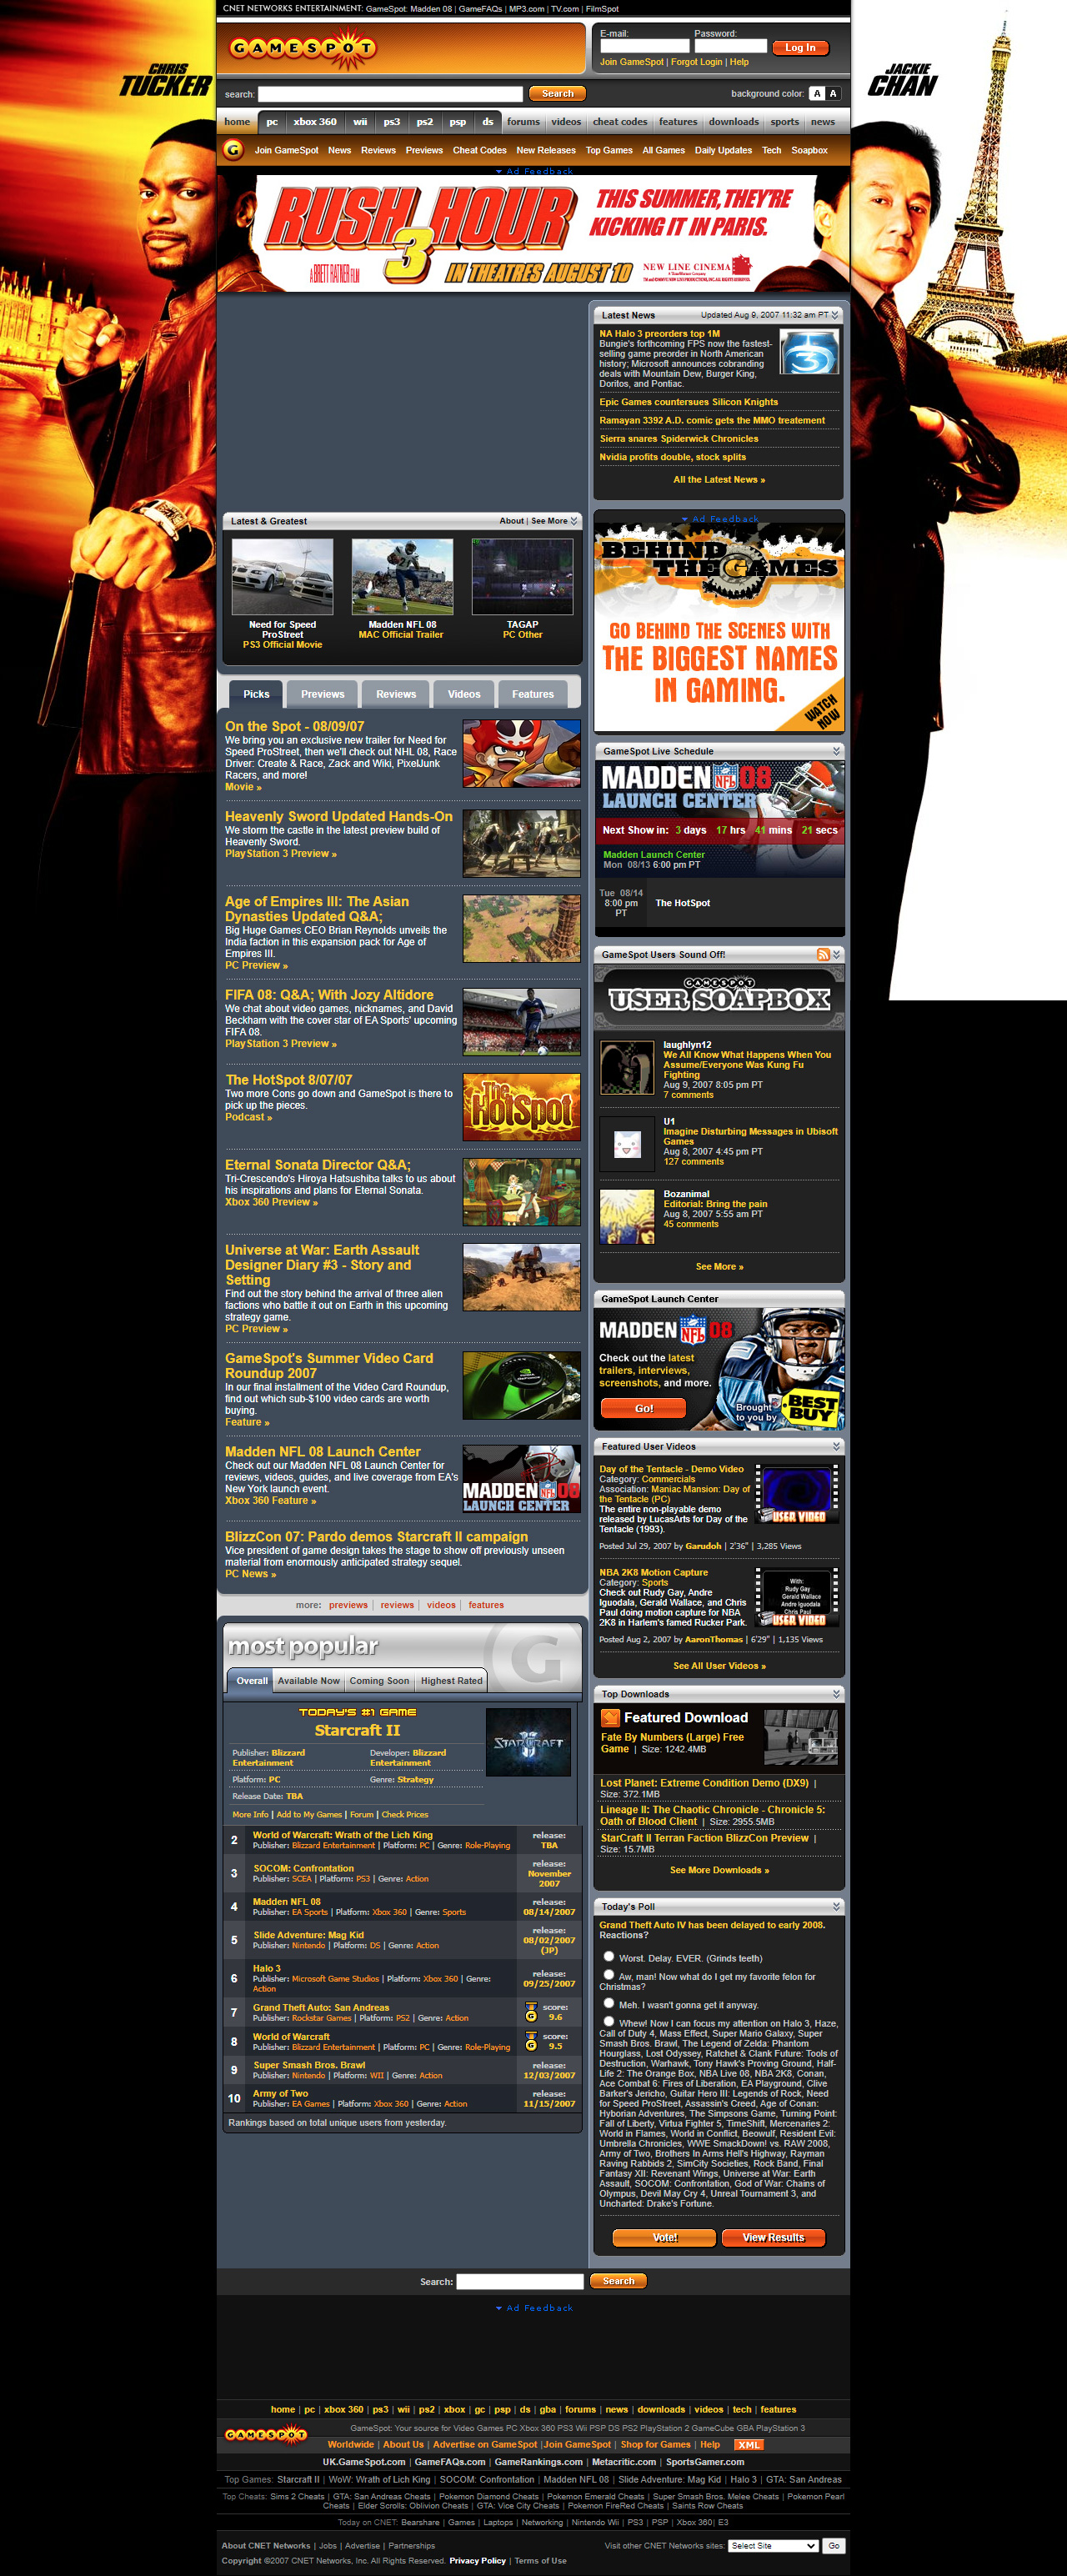 GameSpot in 2007